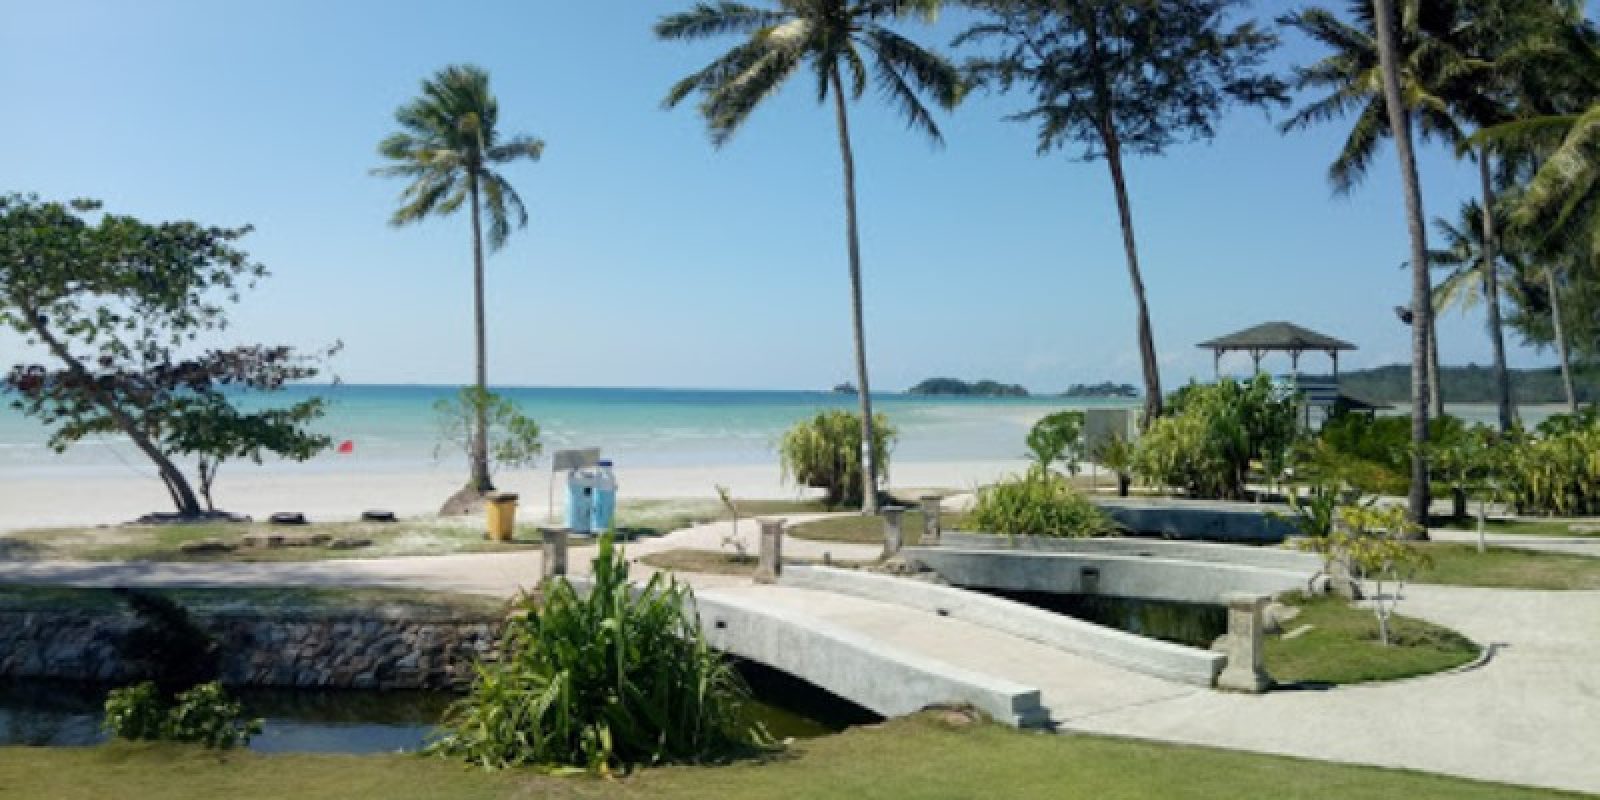 5 Wisata Laut Di Pulau Bintan Yang Paling Hits